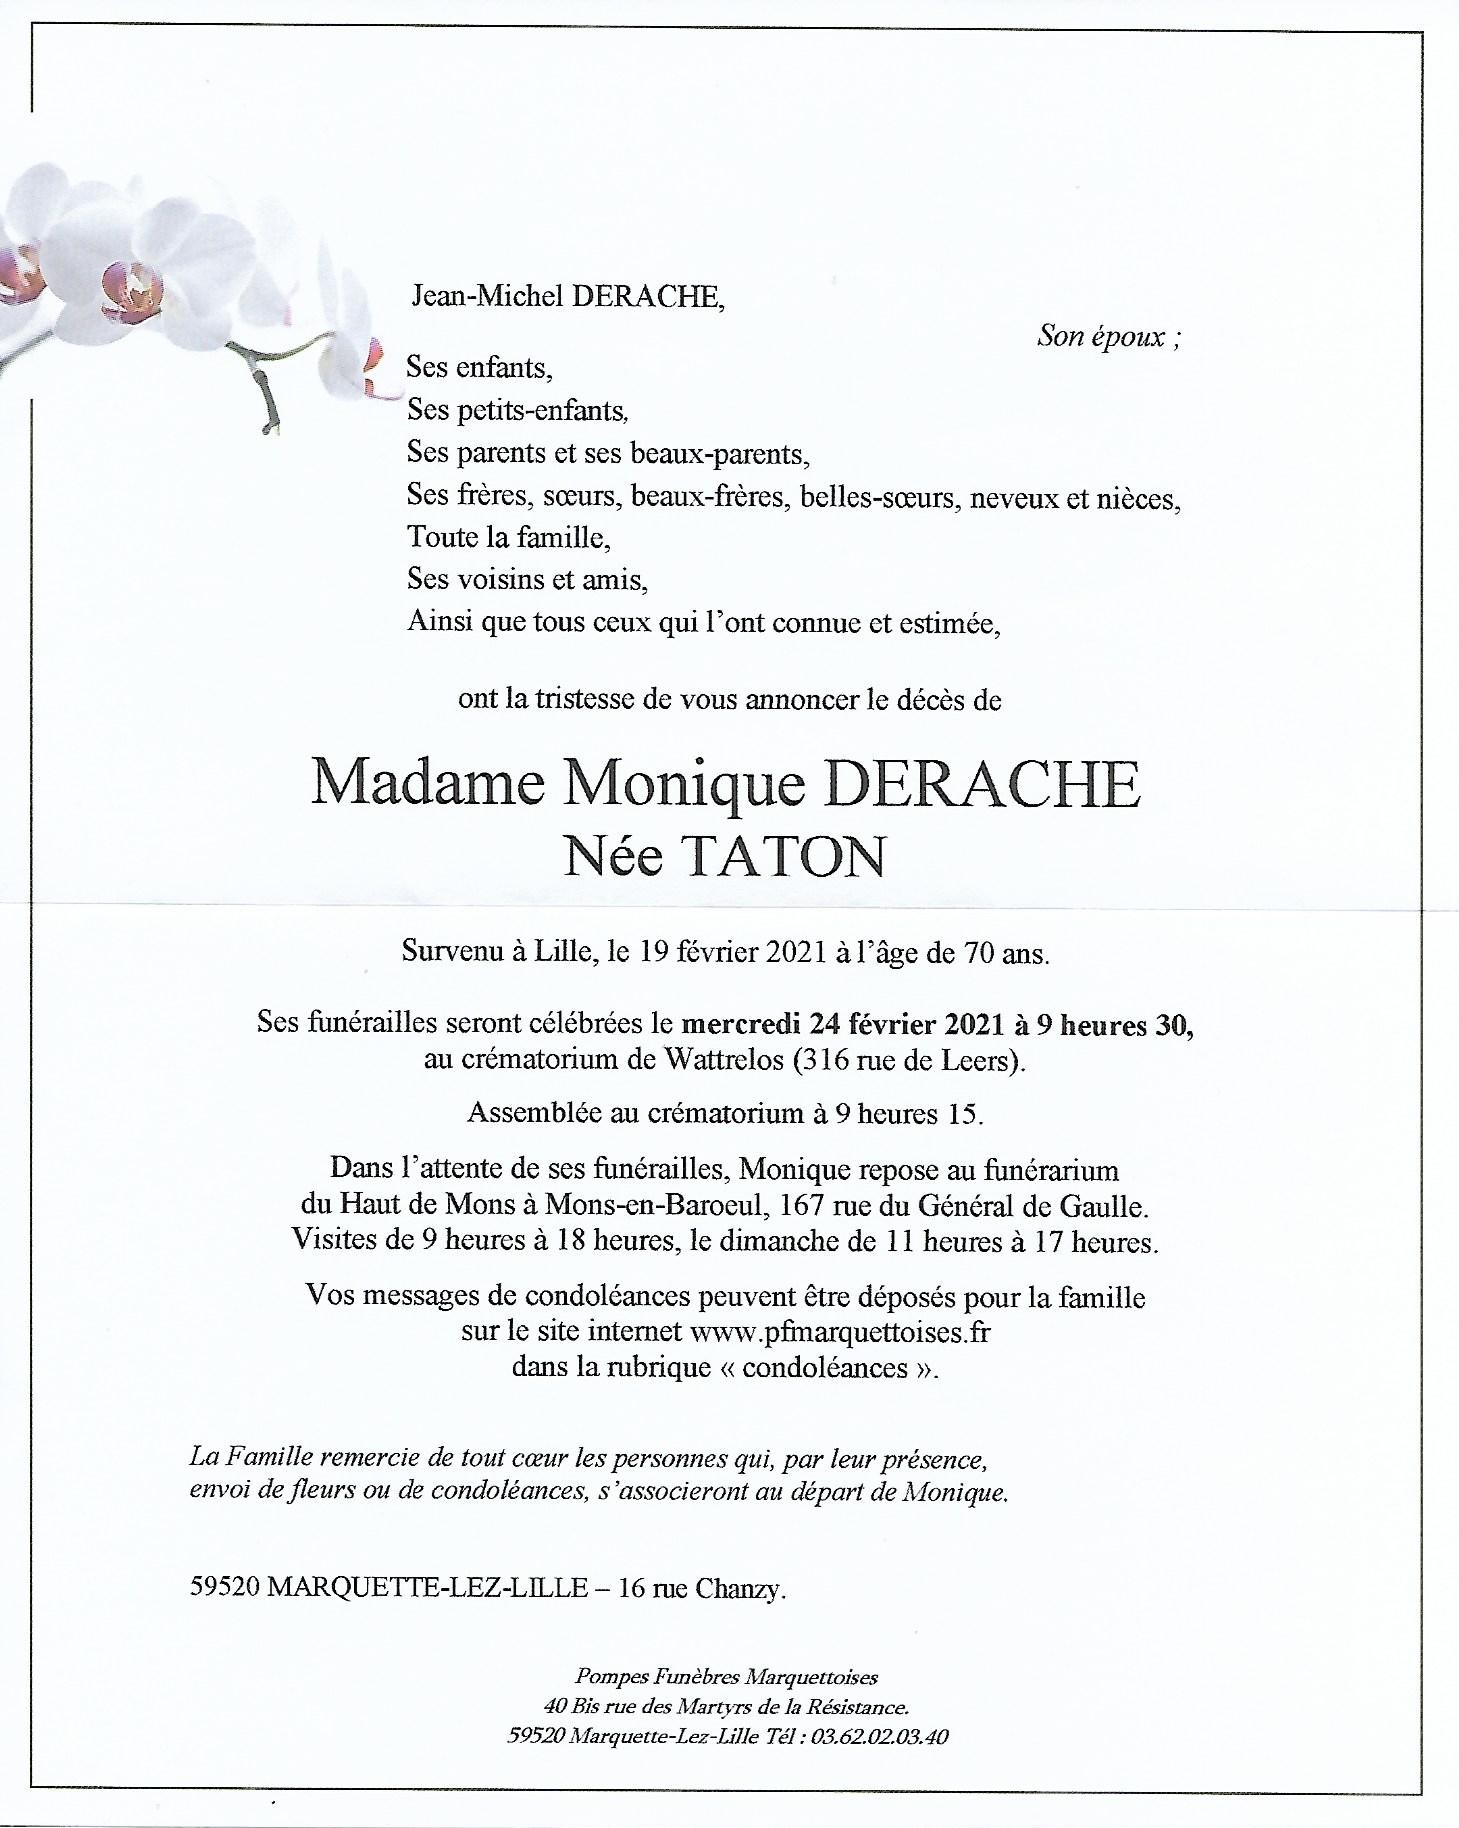 Monique Taton